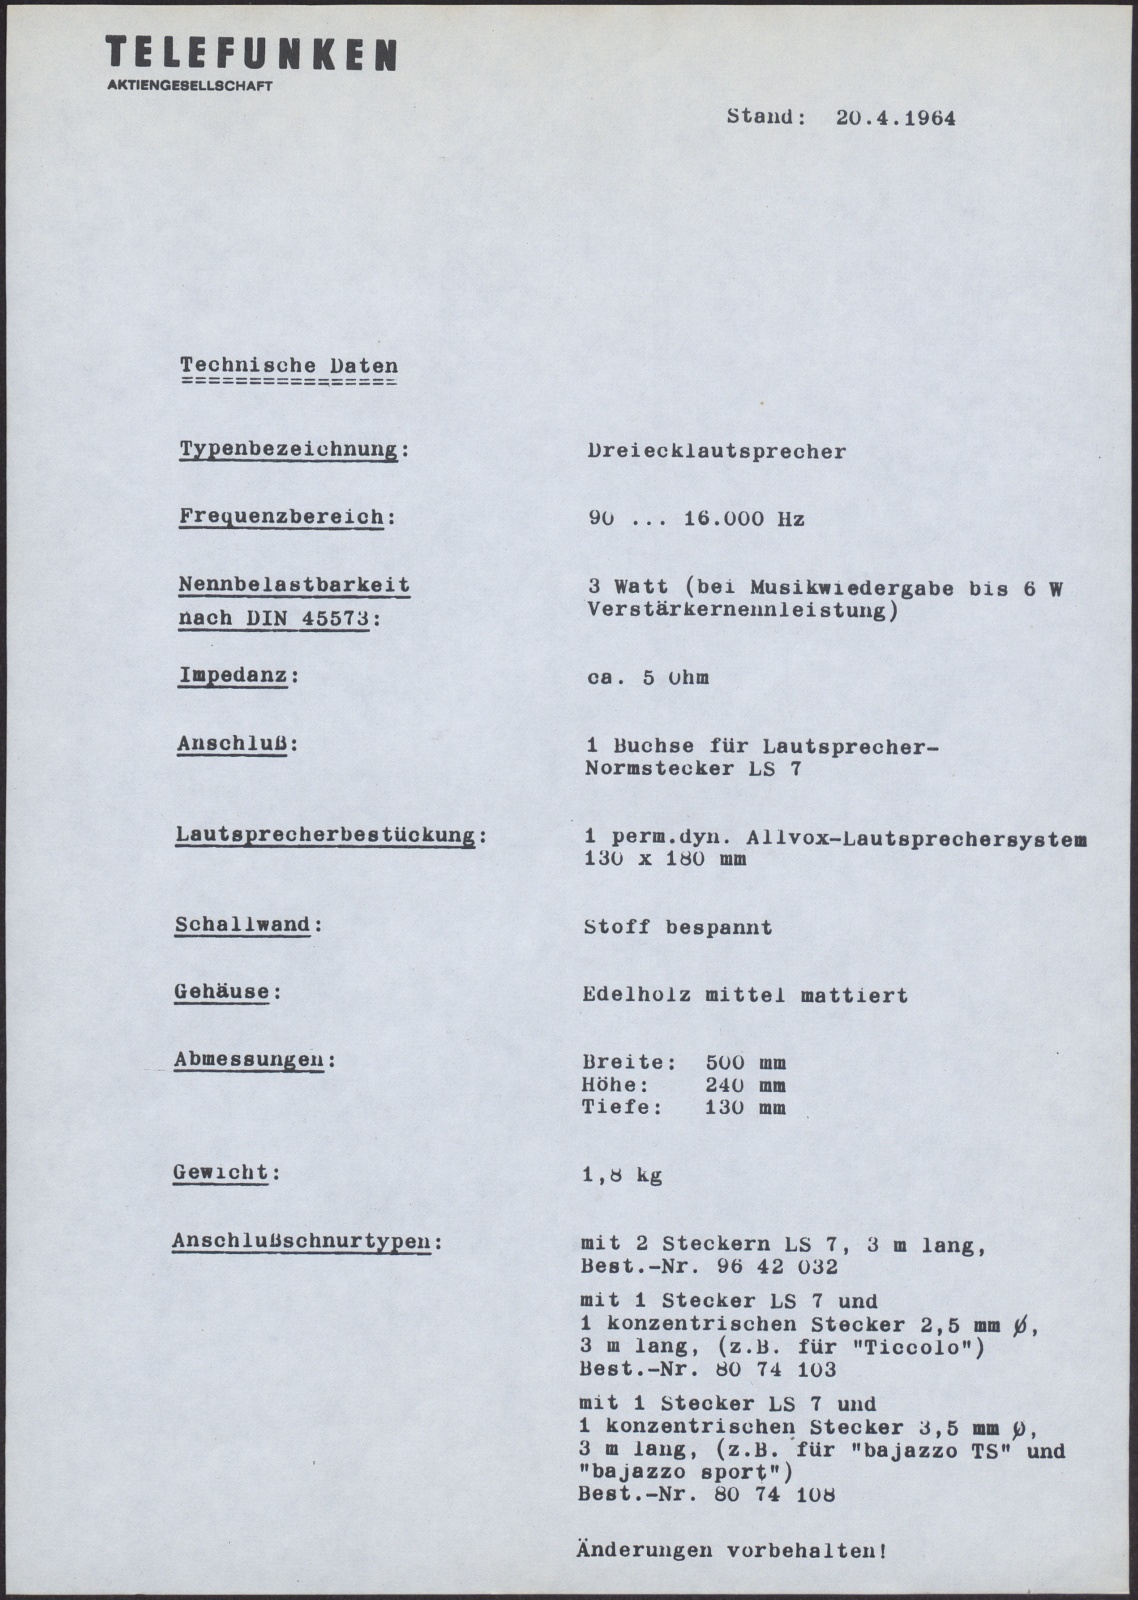 Datenblatt: Datenblatt für Telefunken Dreiecklautsprecher (Stiftung Deutsches Technikmuseum Berlin CC0)